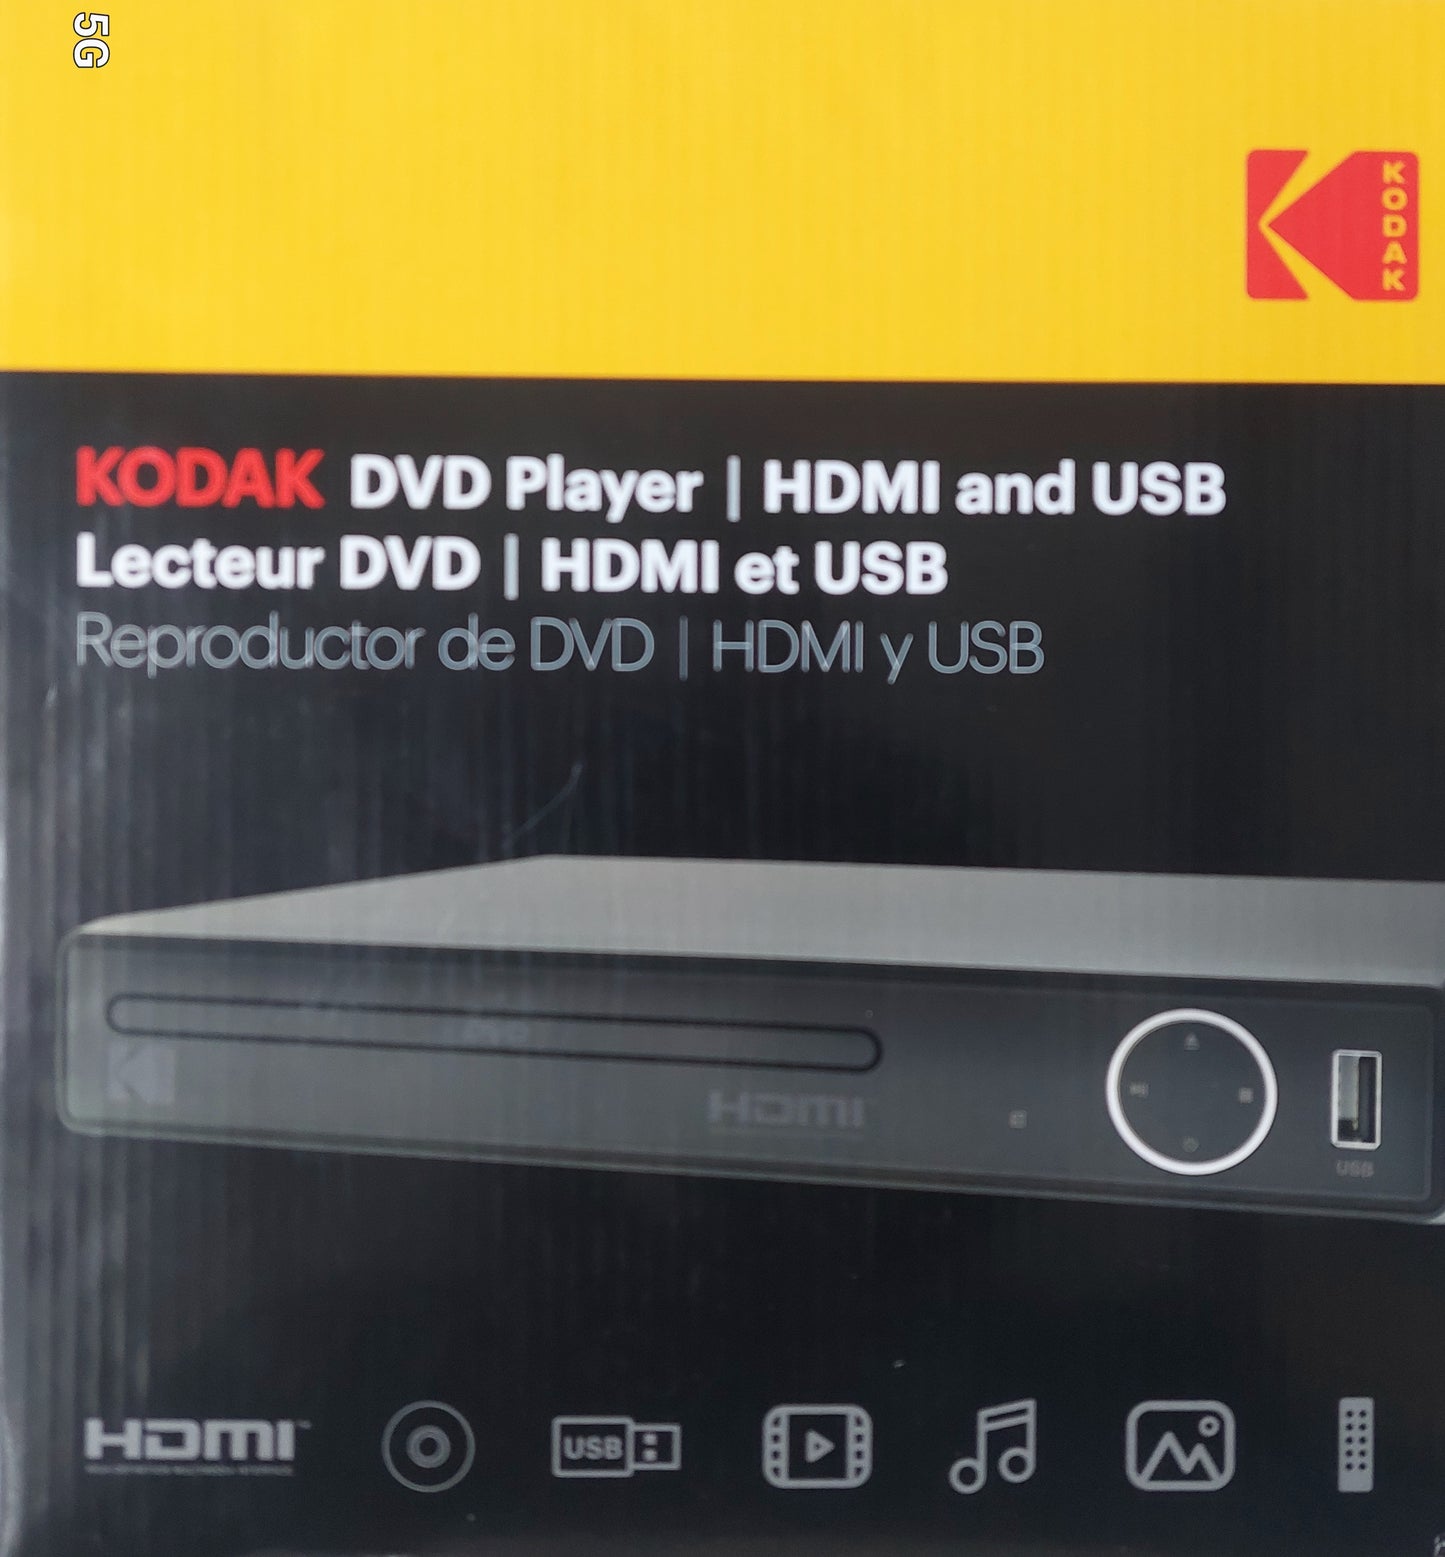 Kodak HD DVD player with HDMI & USB